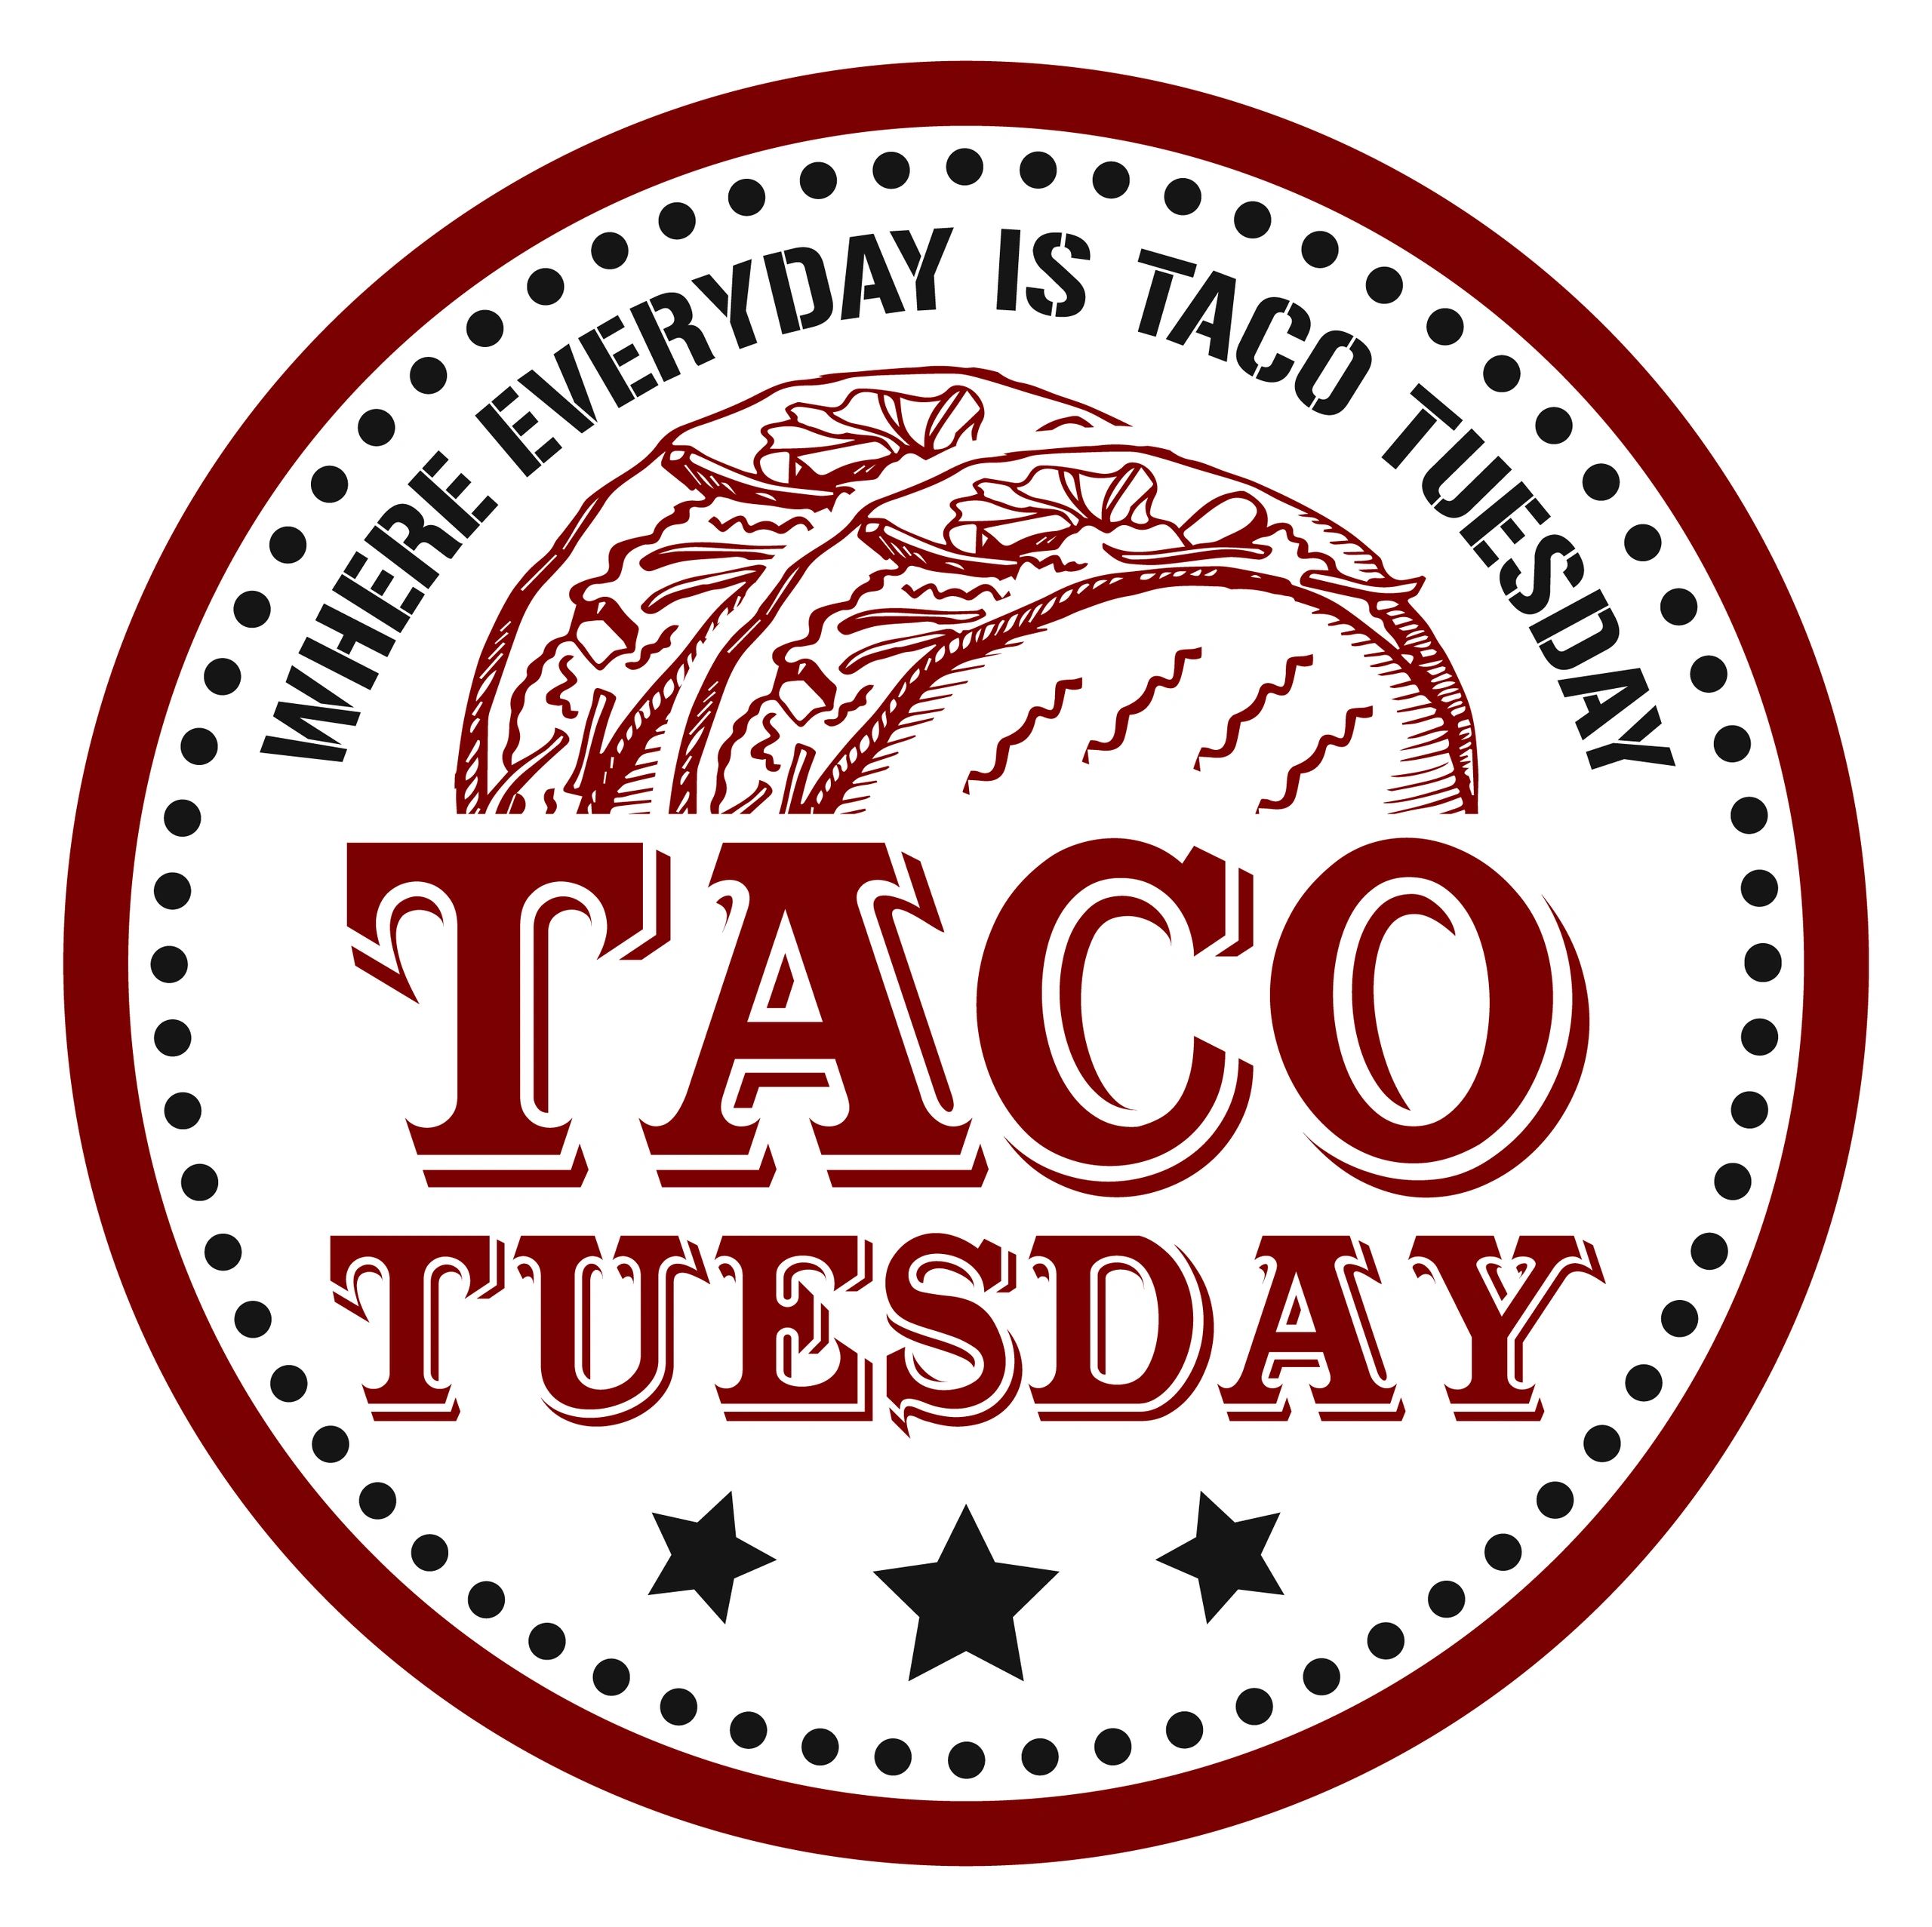 Contact | Taco Tuesday